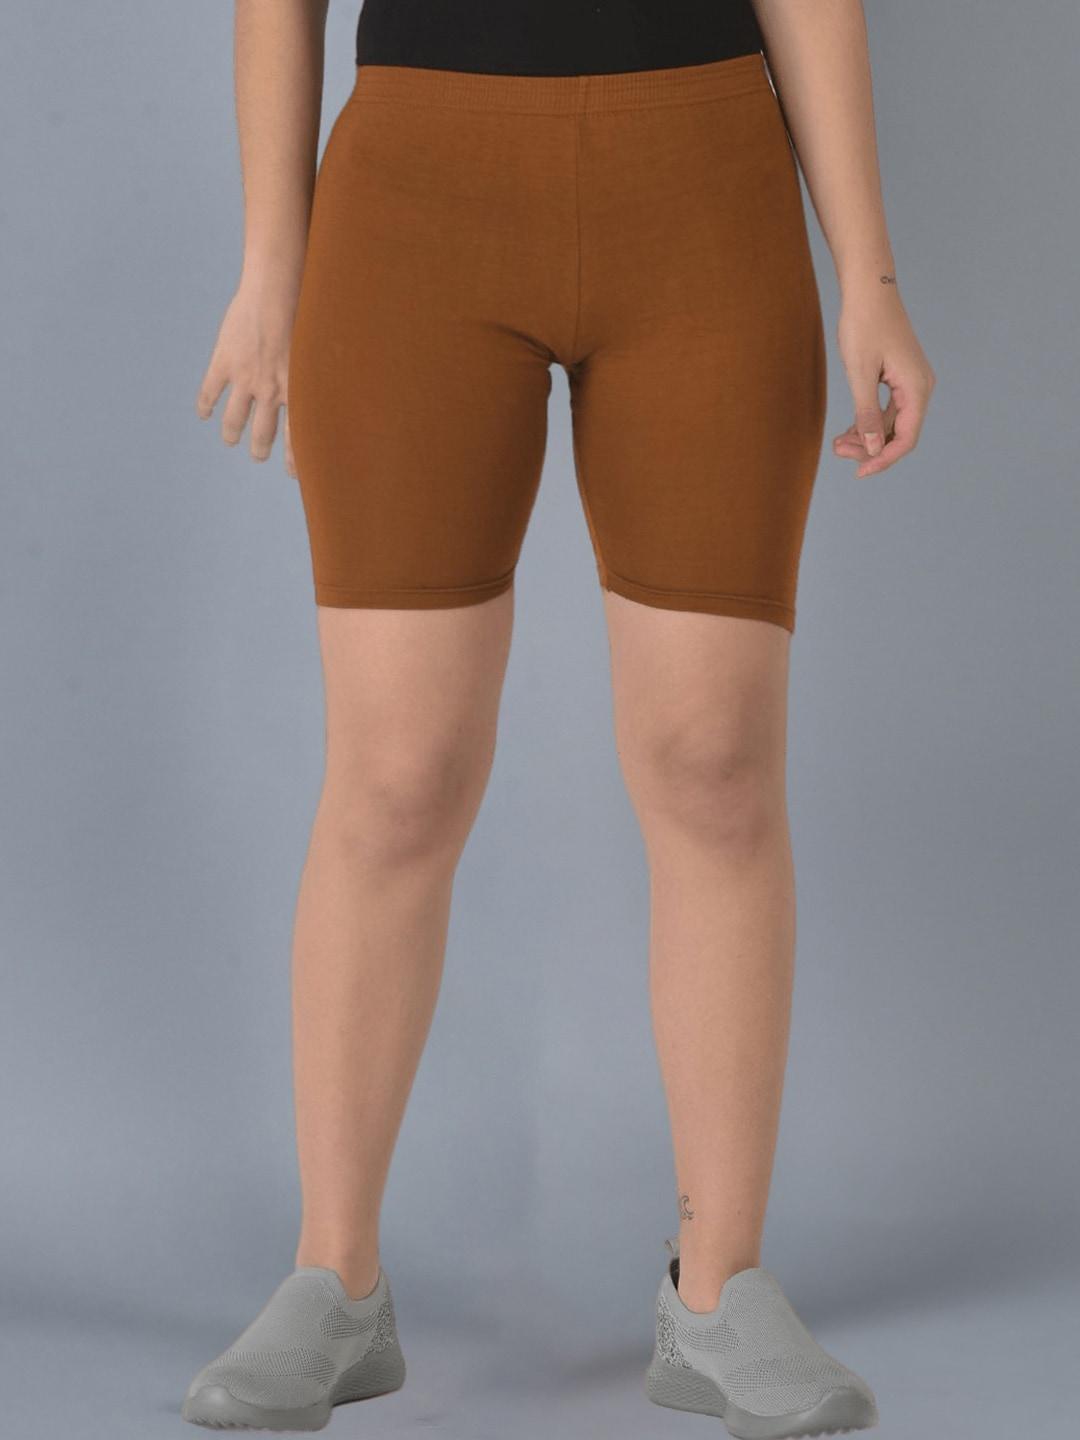 dollar missy women skinny fit pure cotton sports shorts